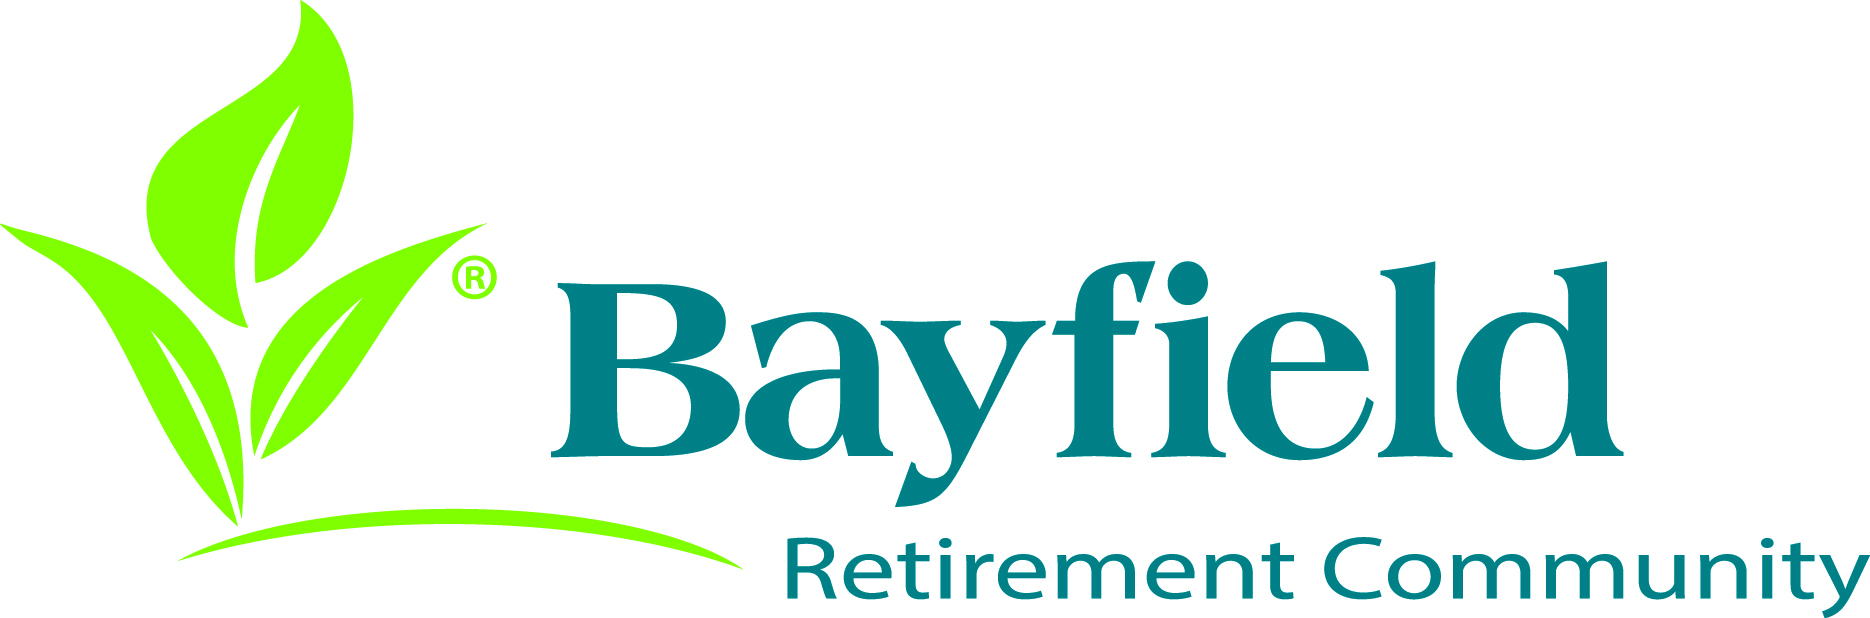 Bayfield Retirement Community Logo